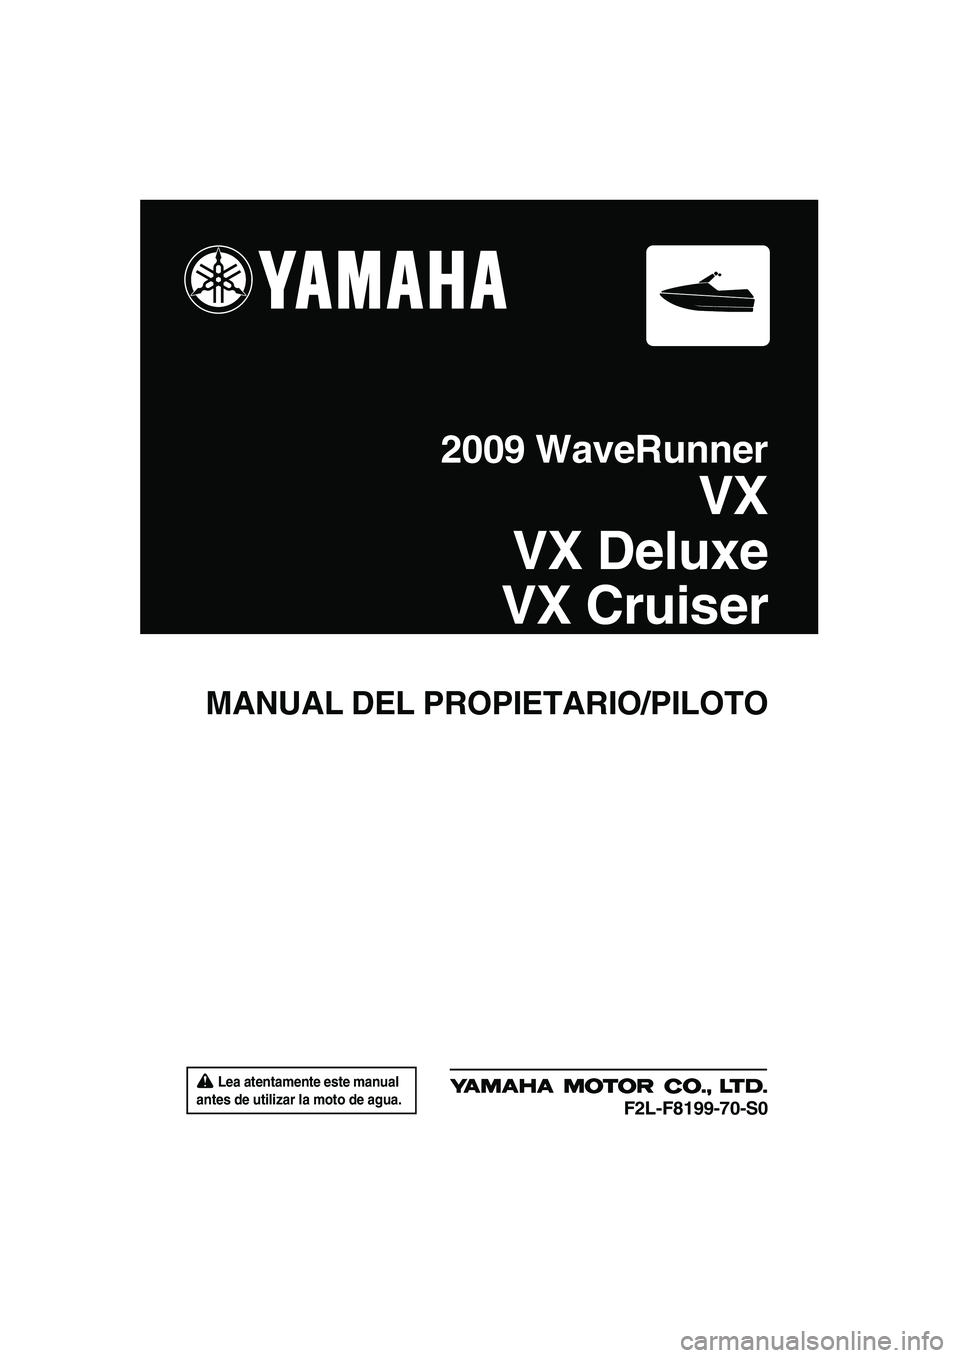 YAMAHA VX SPORT 2009  Manuale de Empleo (in Spanish) 